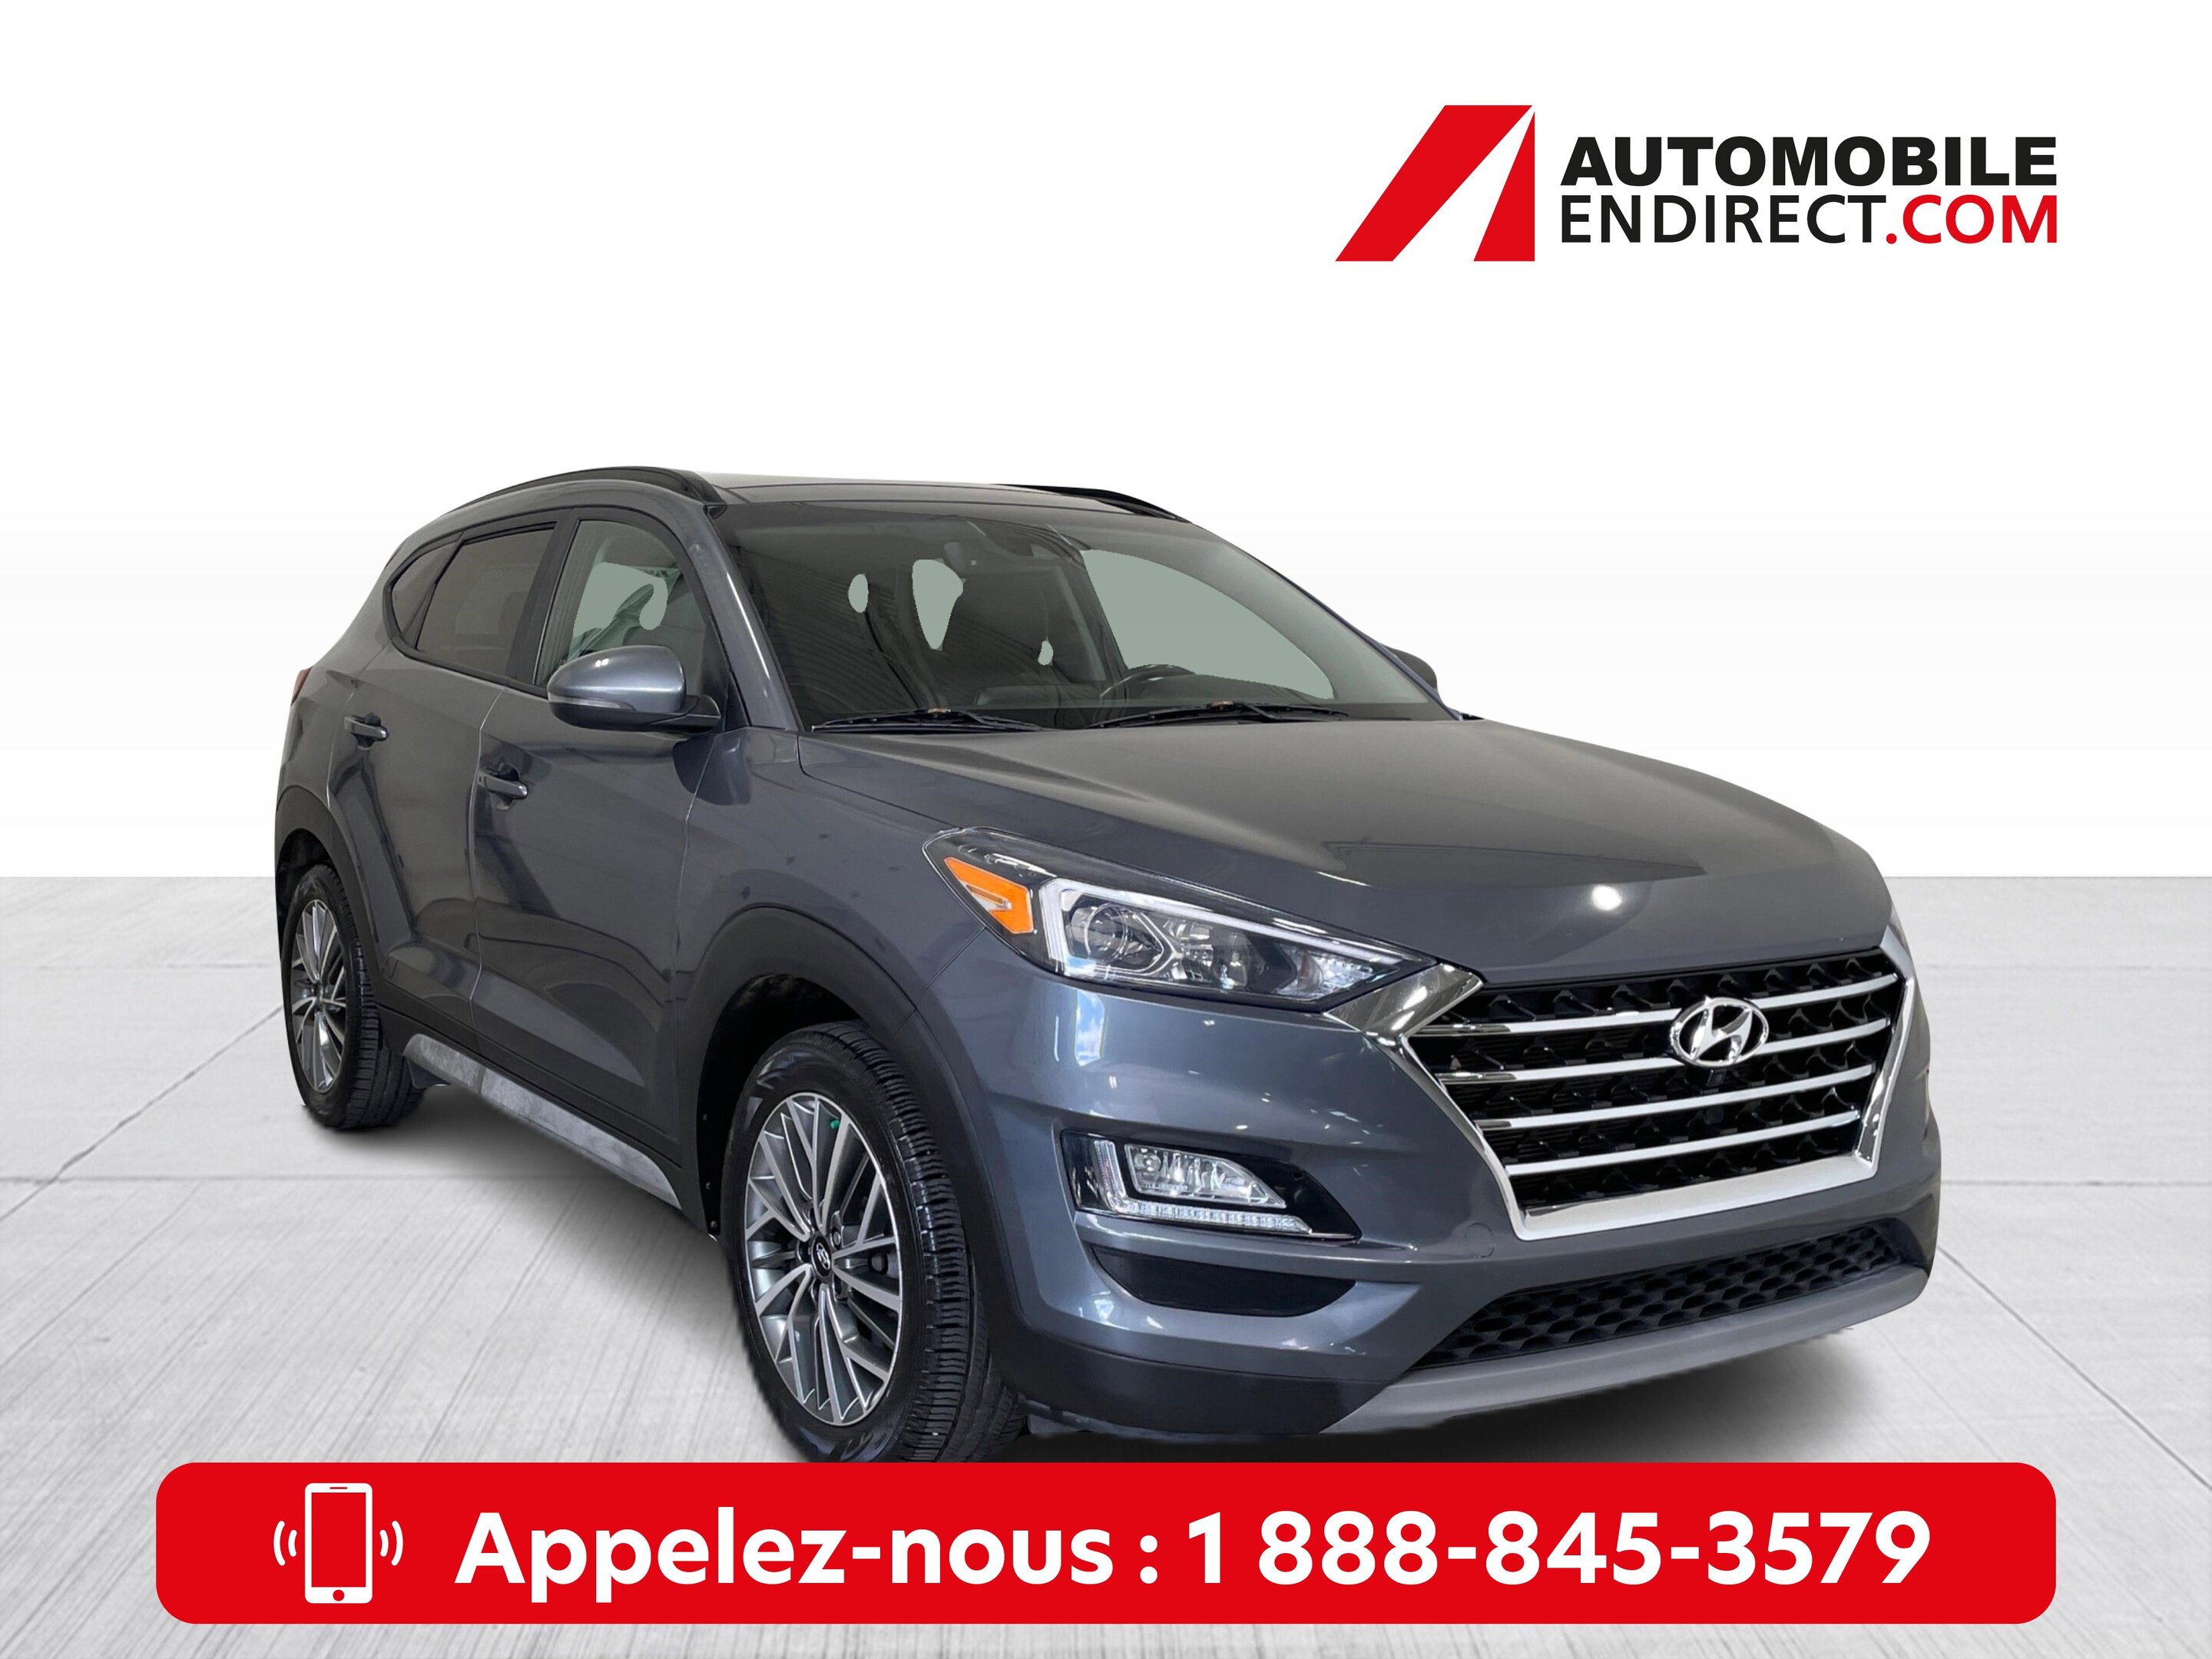 2019 Hyundai Tucson LUXURY AWD Cuir Toit pano Mags CarPlay